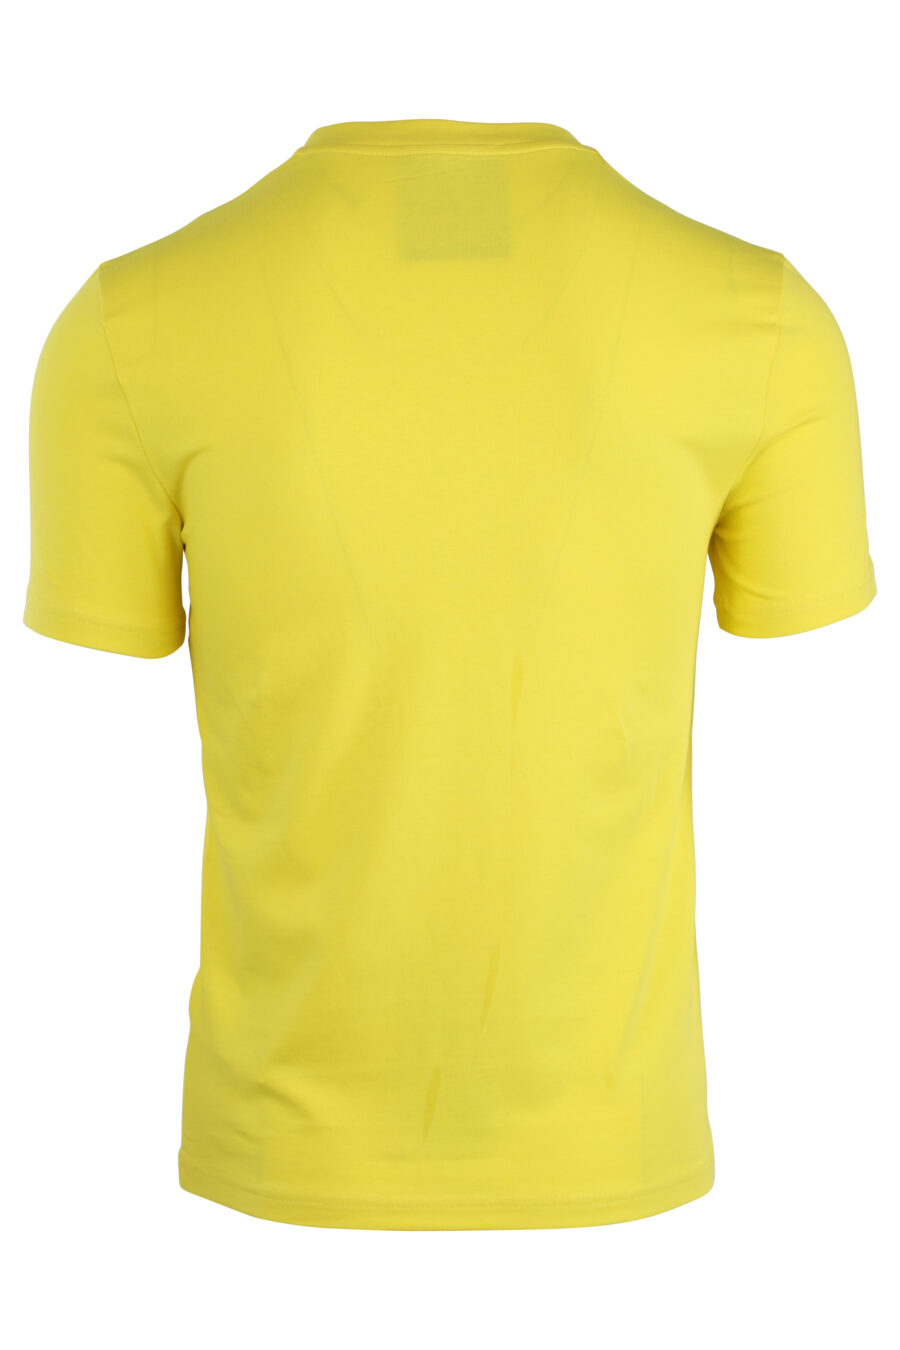 T-shirt jaune avec maxilogue noir - IMG 1661